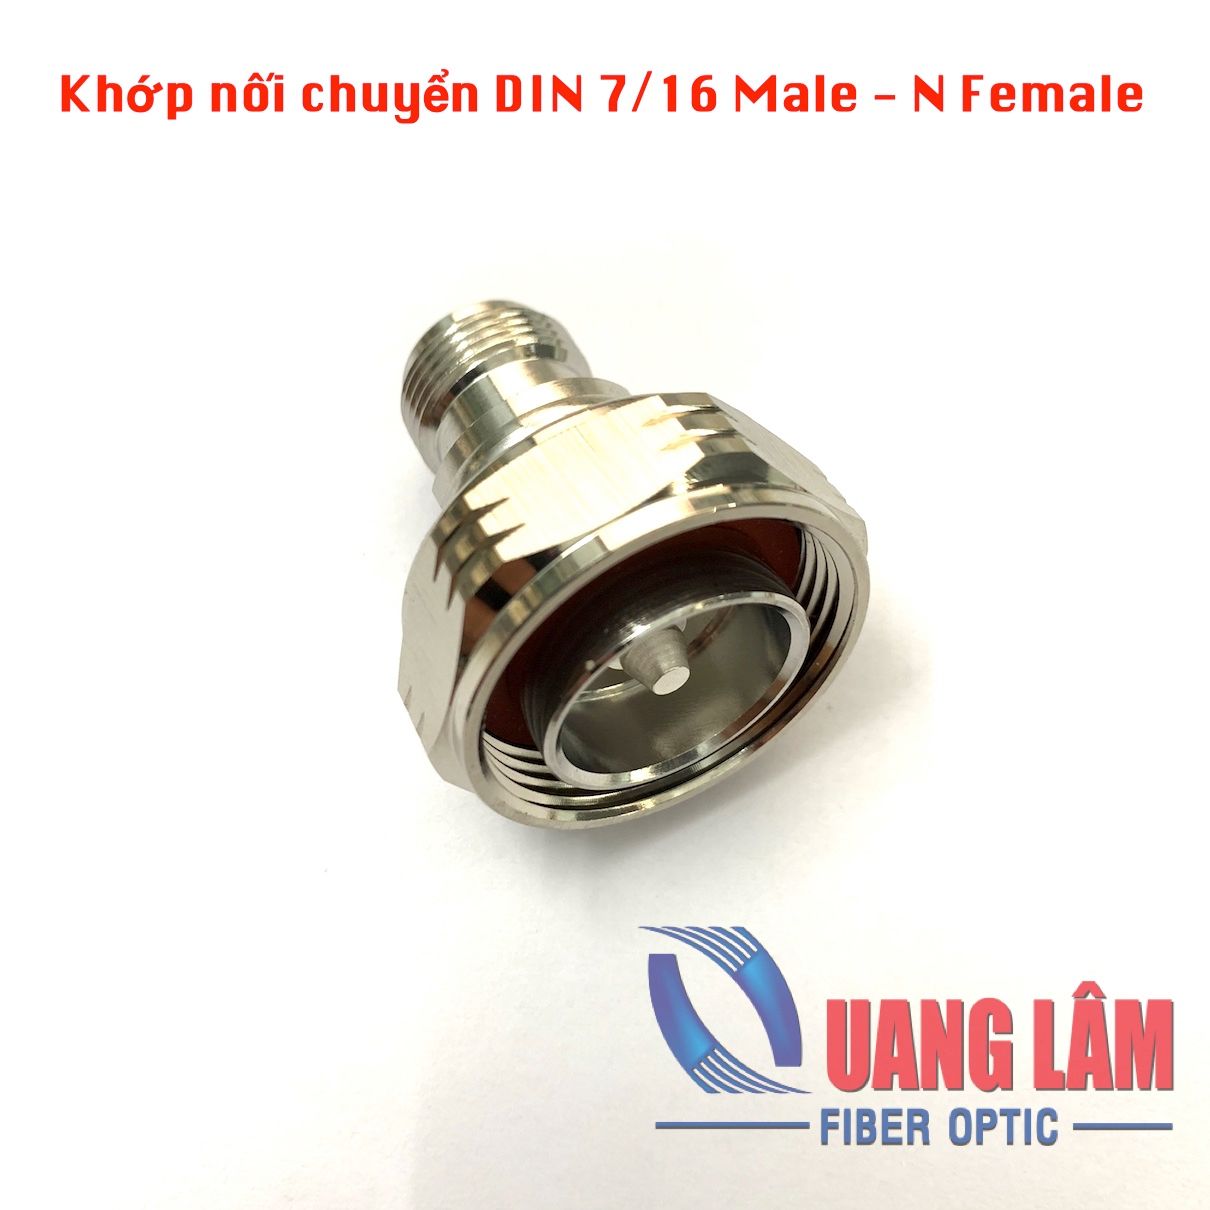 Khớp nối chuyển DIN Male sang N Female (Adapter DINM-NF JK)